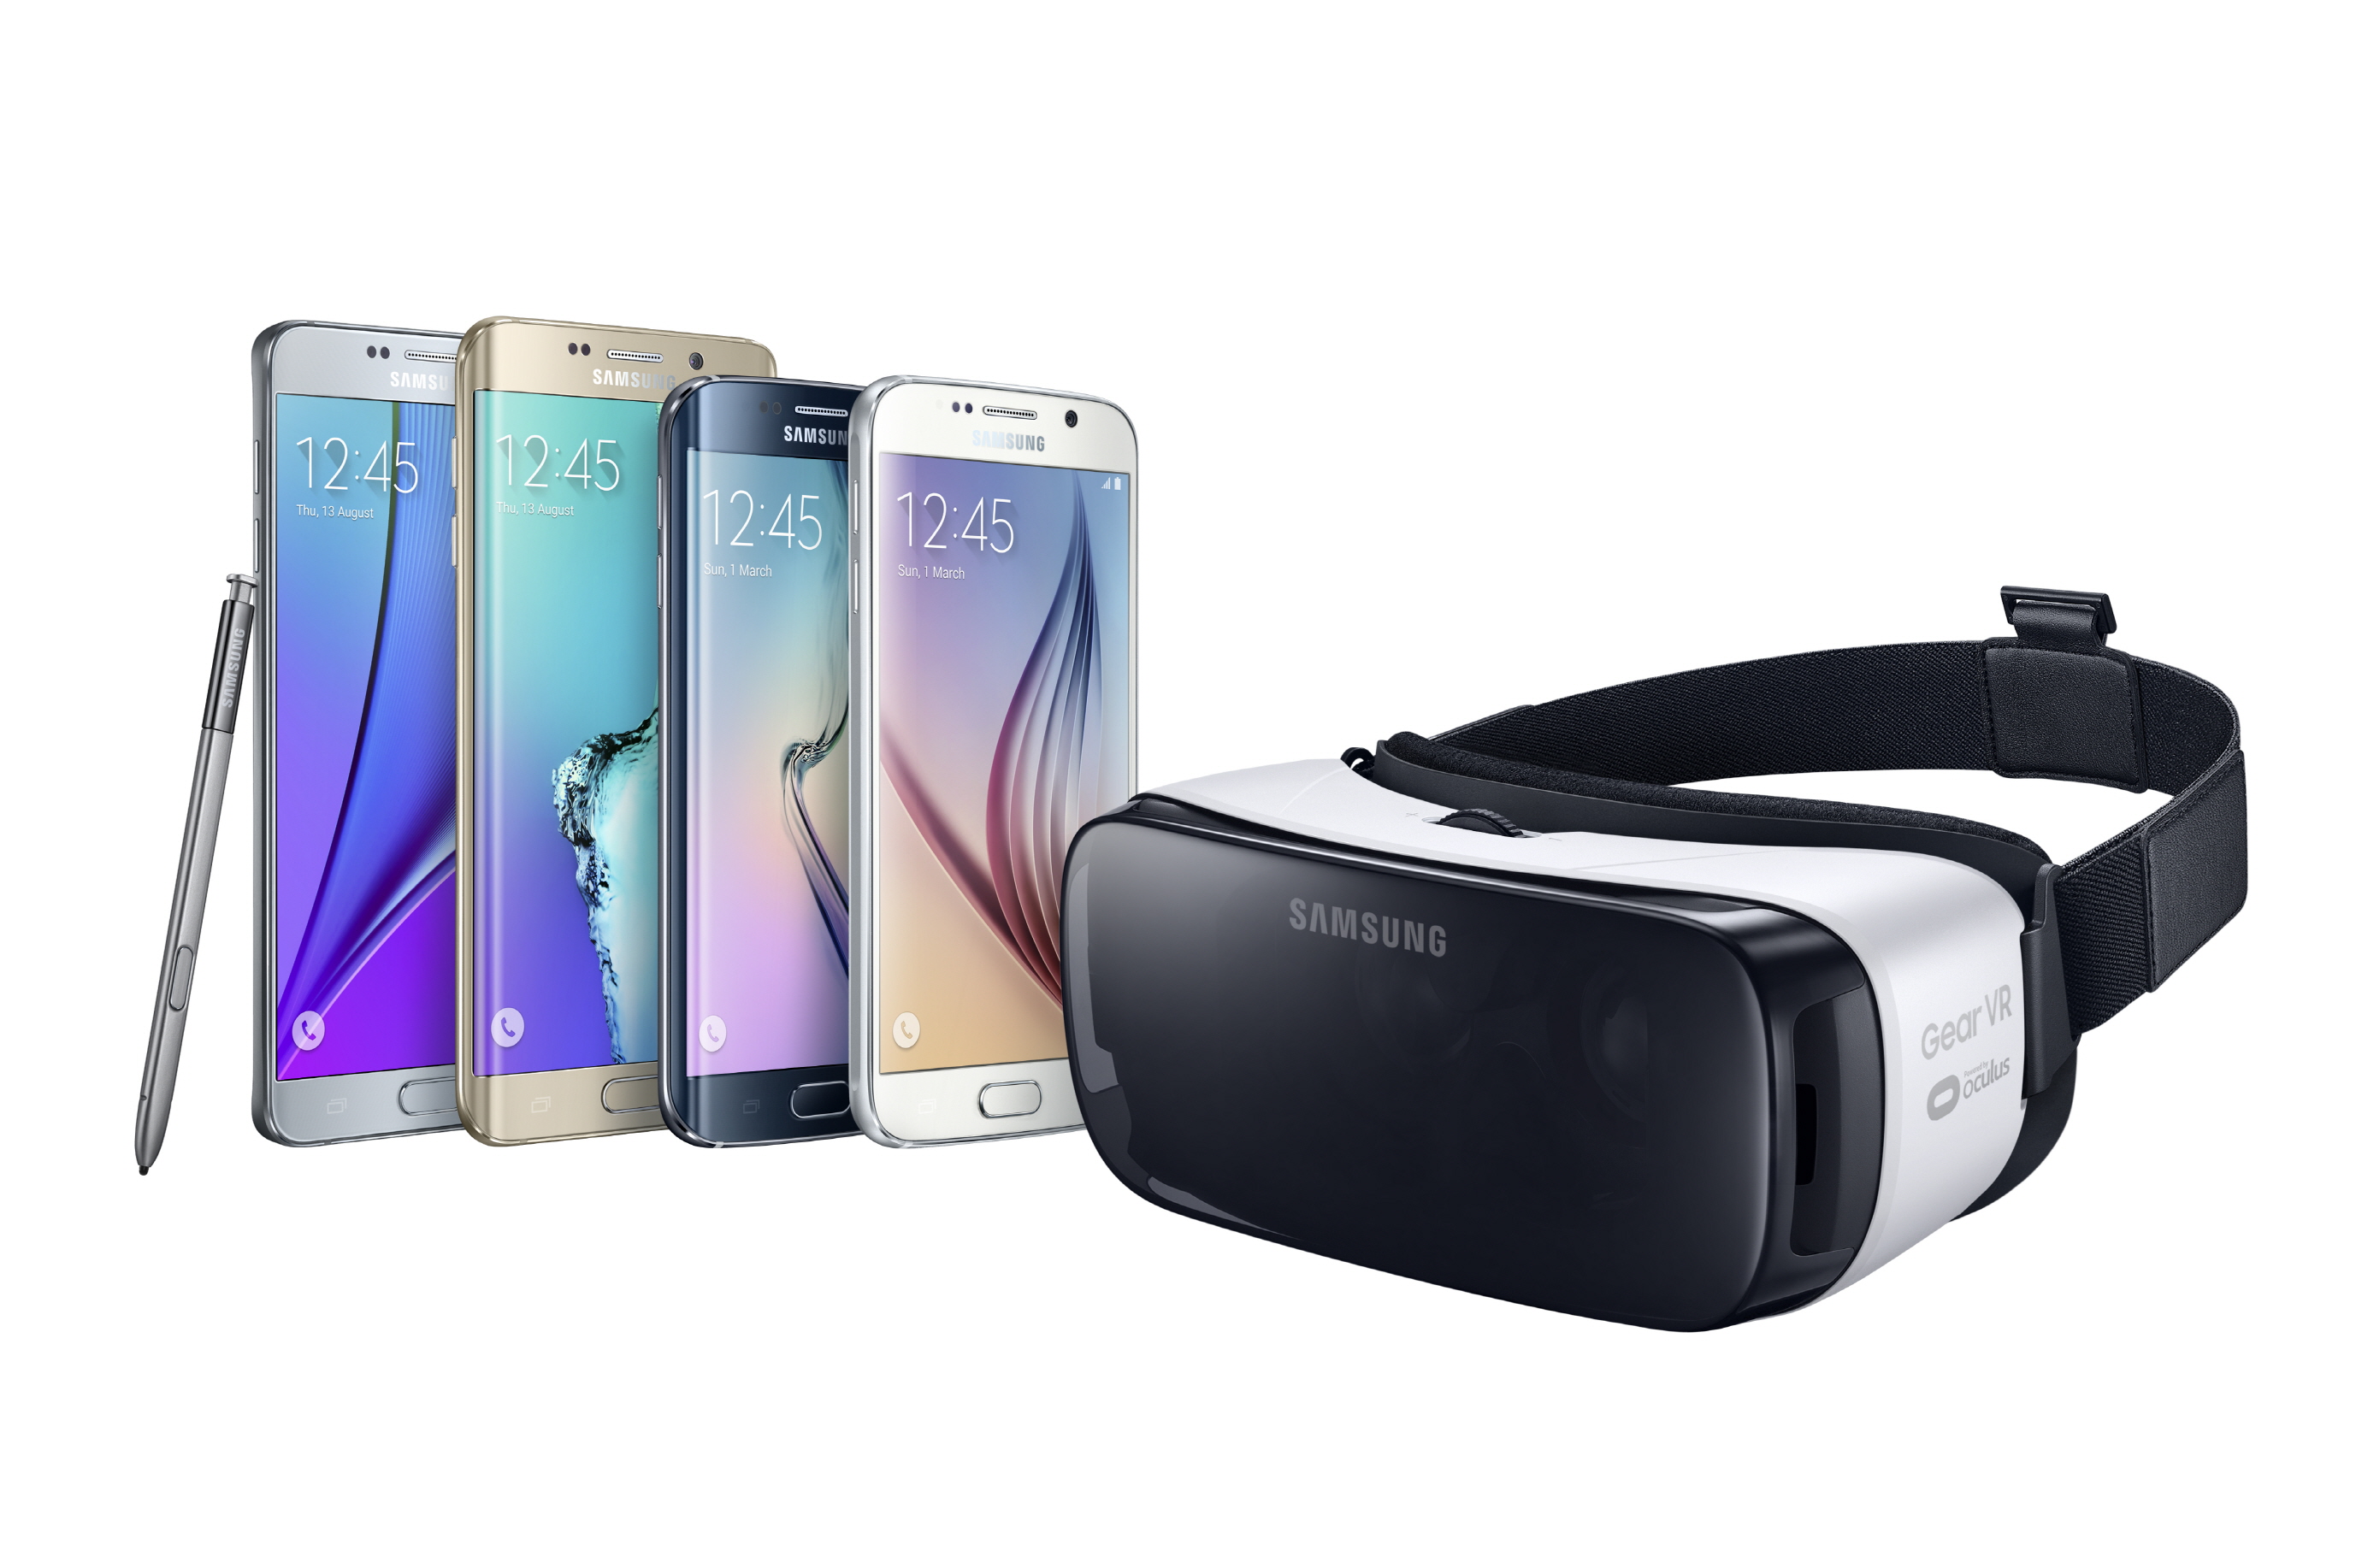 Samsung Gear VR Headsets